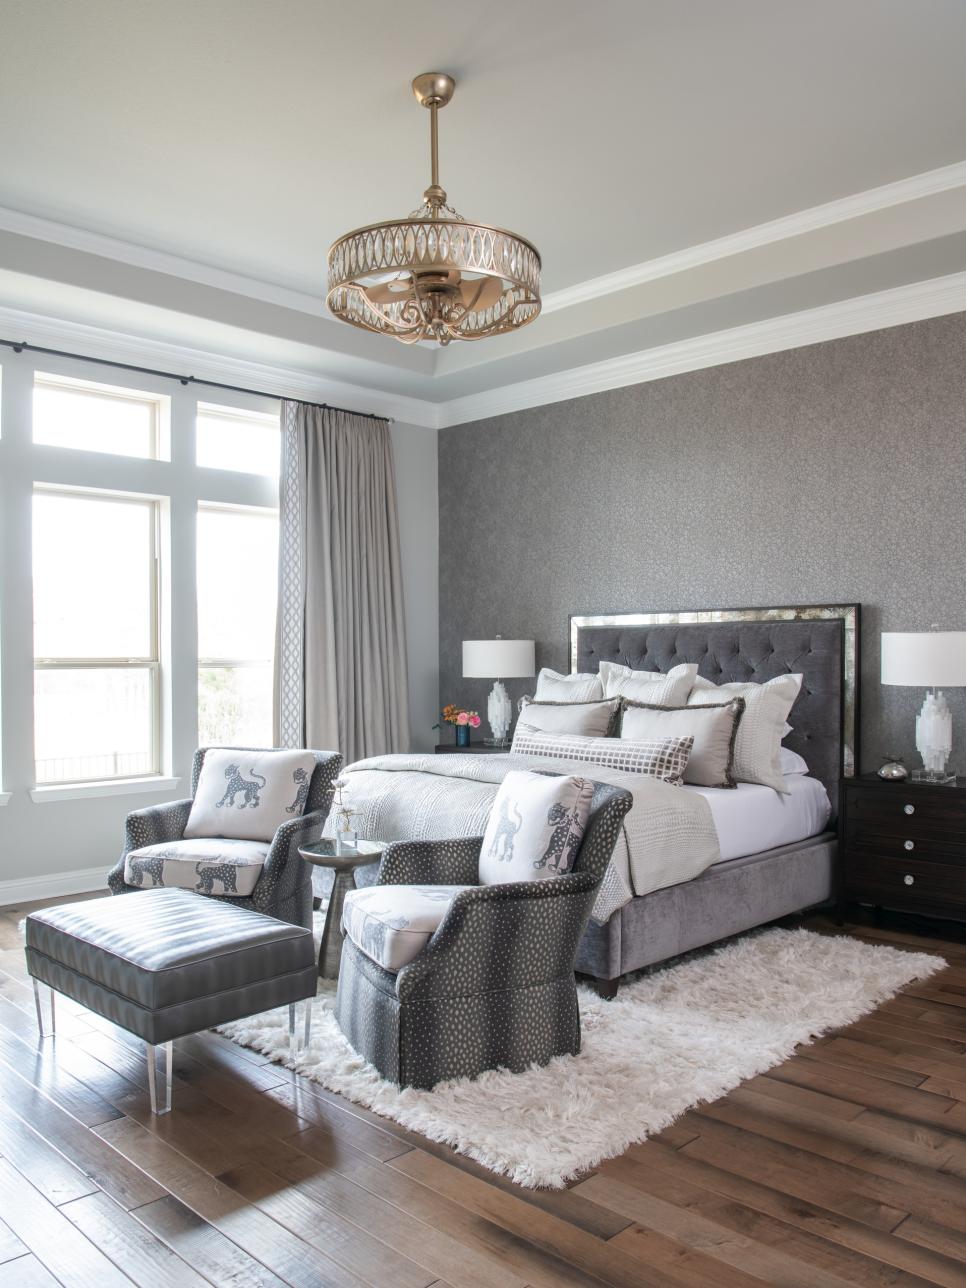 Luxurious Master Bedroom With Fan Chandelier | HGTV